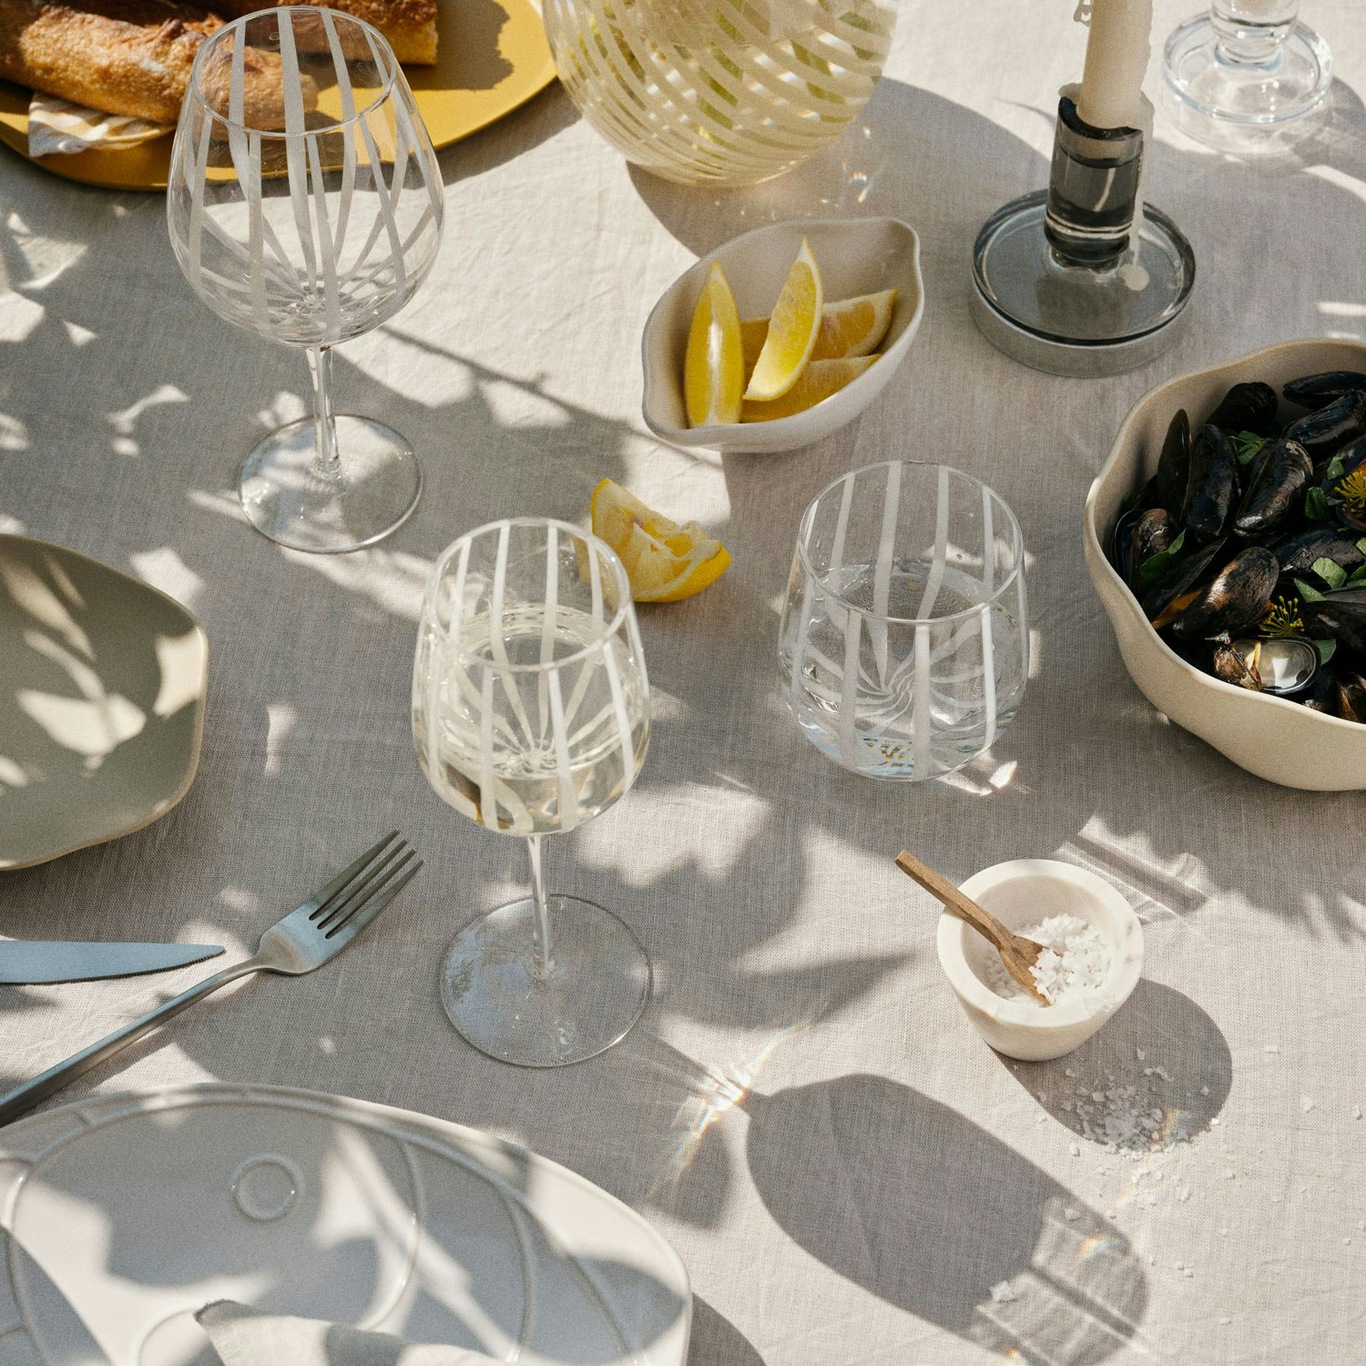 https://royaldesign.co.uk/image/6/broste-copenhagen-striped-drinking-glass-8?w=800&quality=80